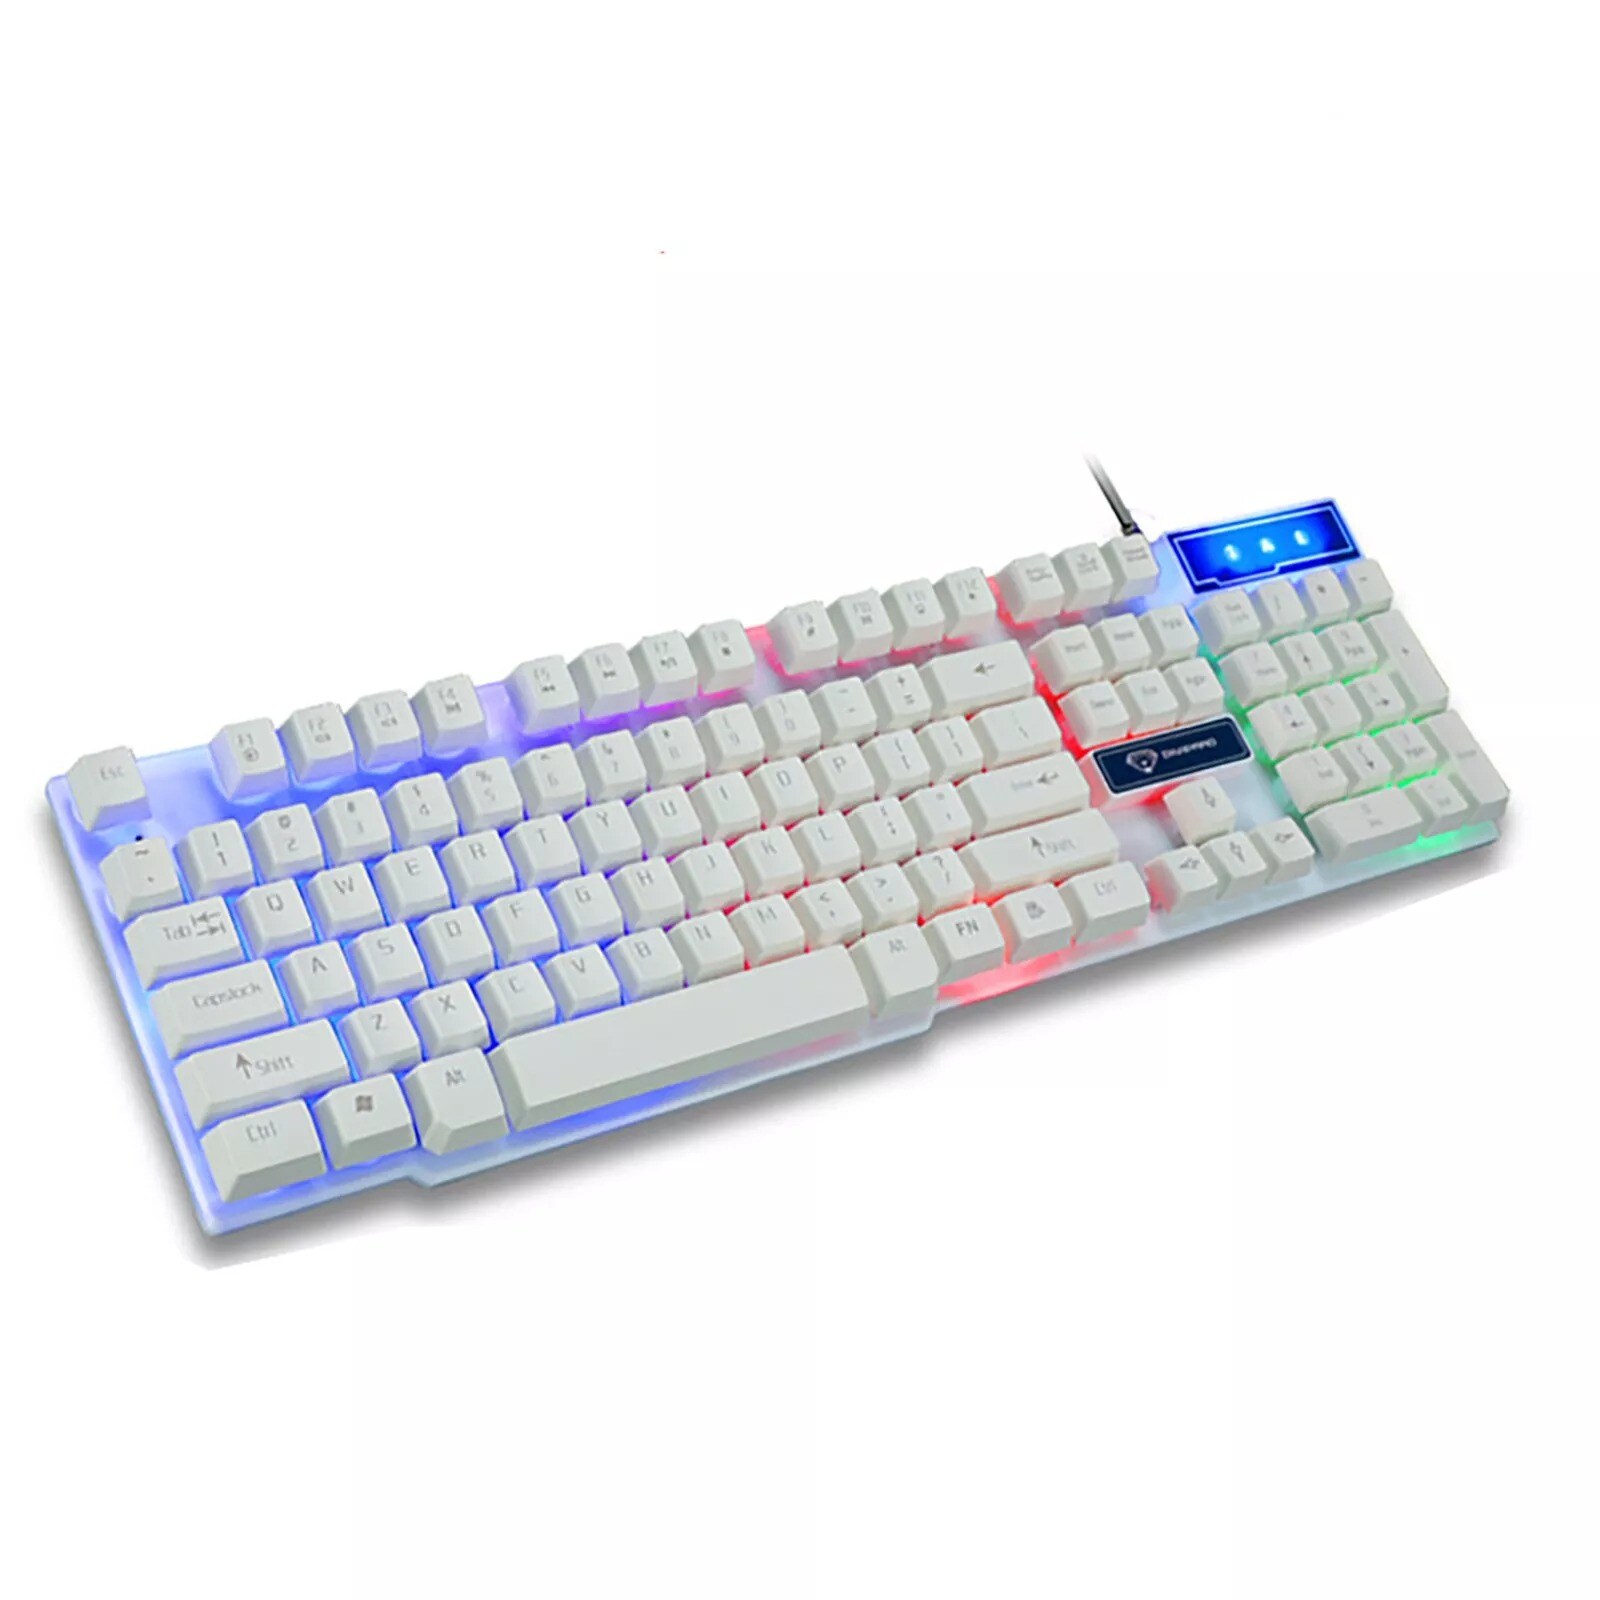 Wired USB Gaming Keyboard Floating Cap Waterproof Rainbow White - 1